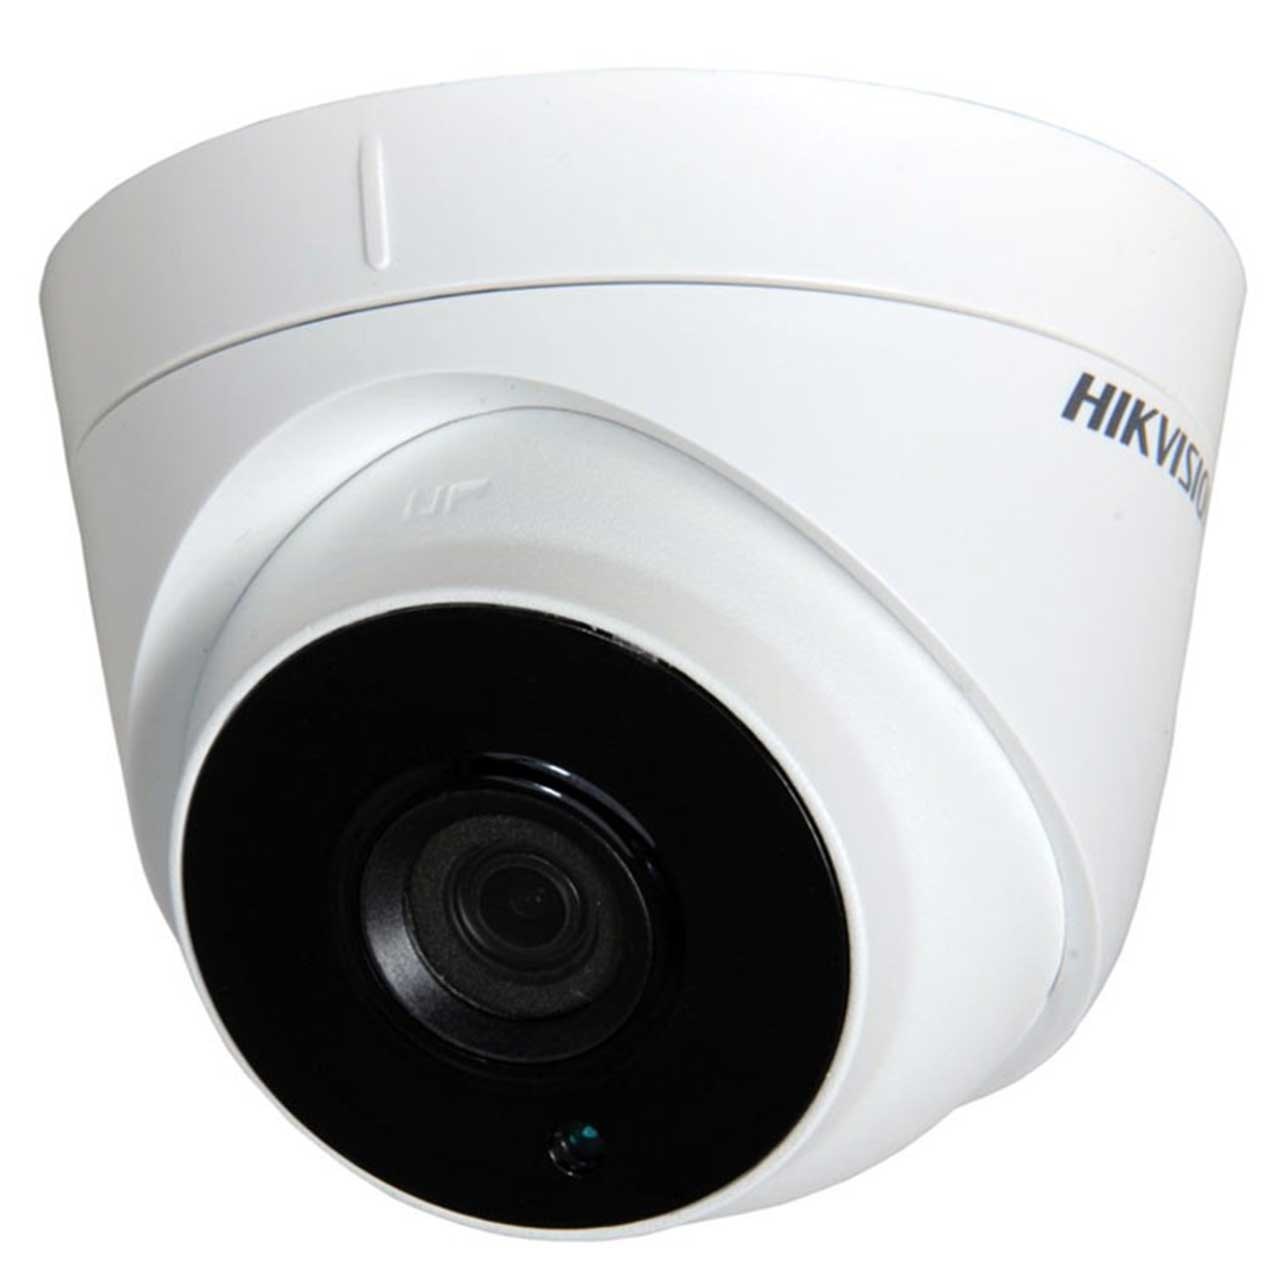 دوربین آنالوگ هایک ویژن مدل DS-2CE56D0T-IT1